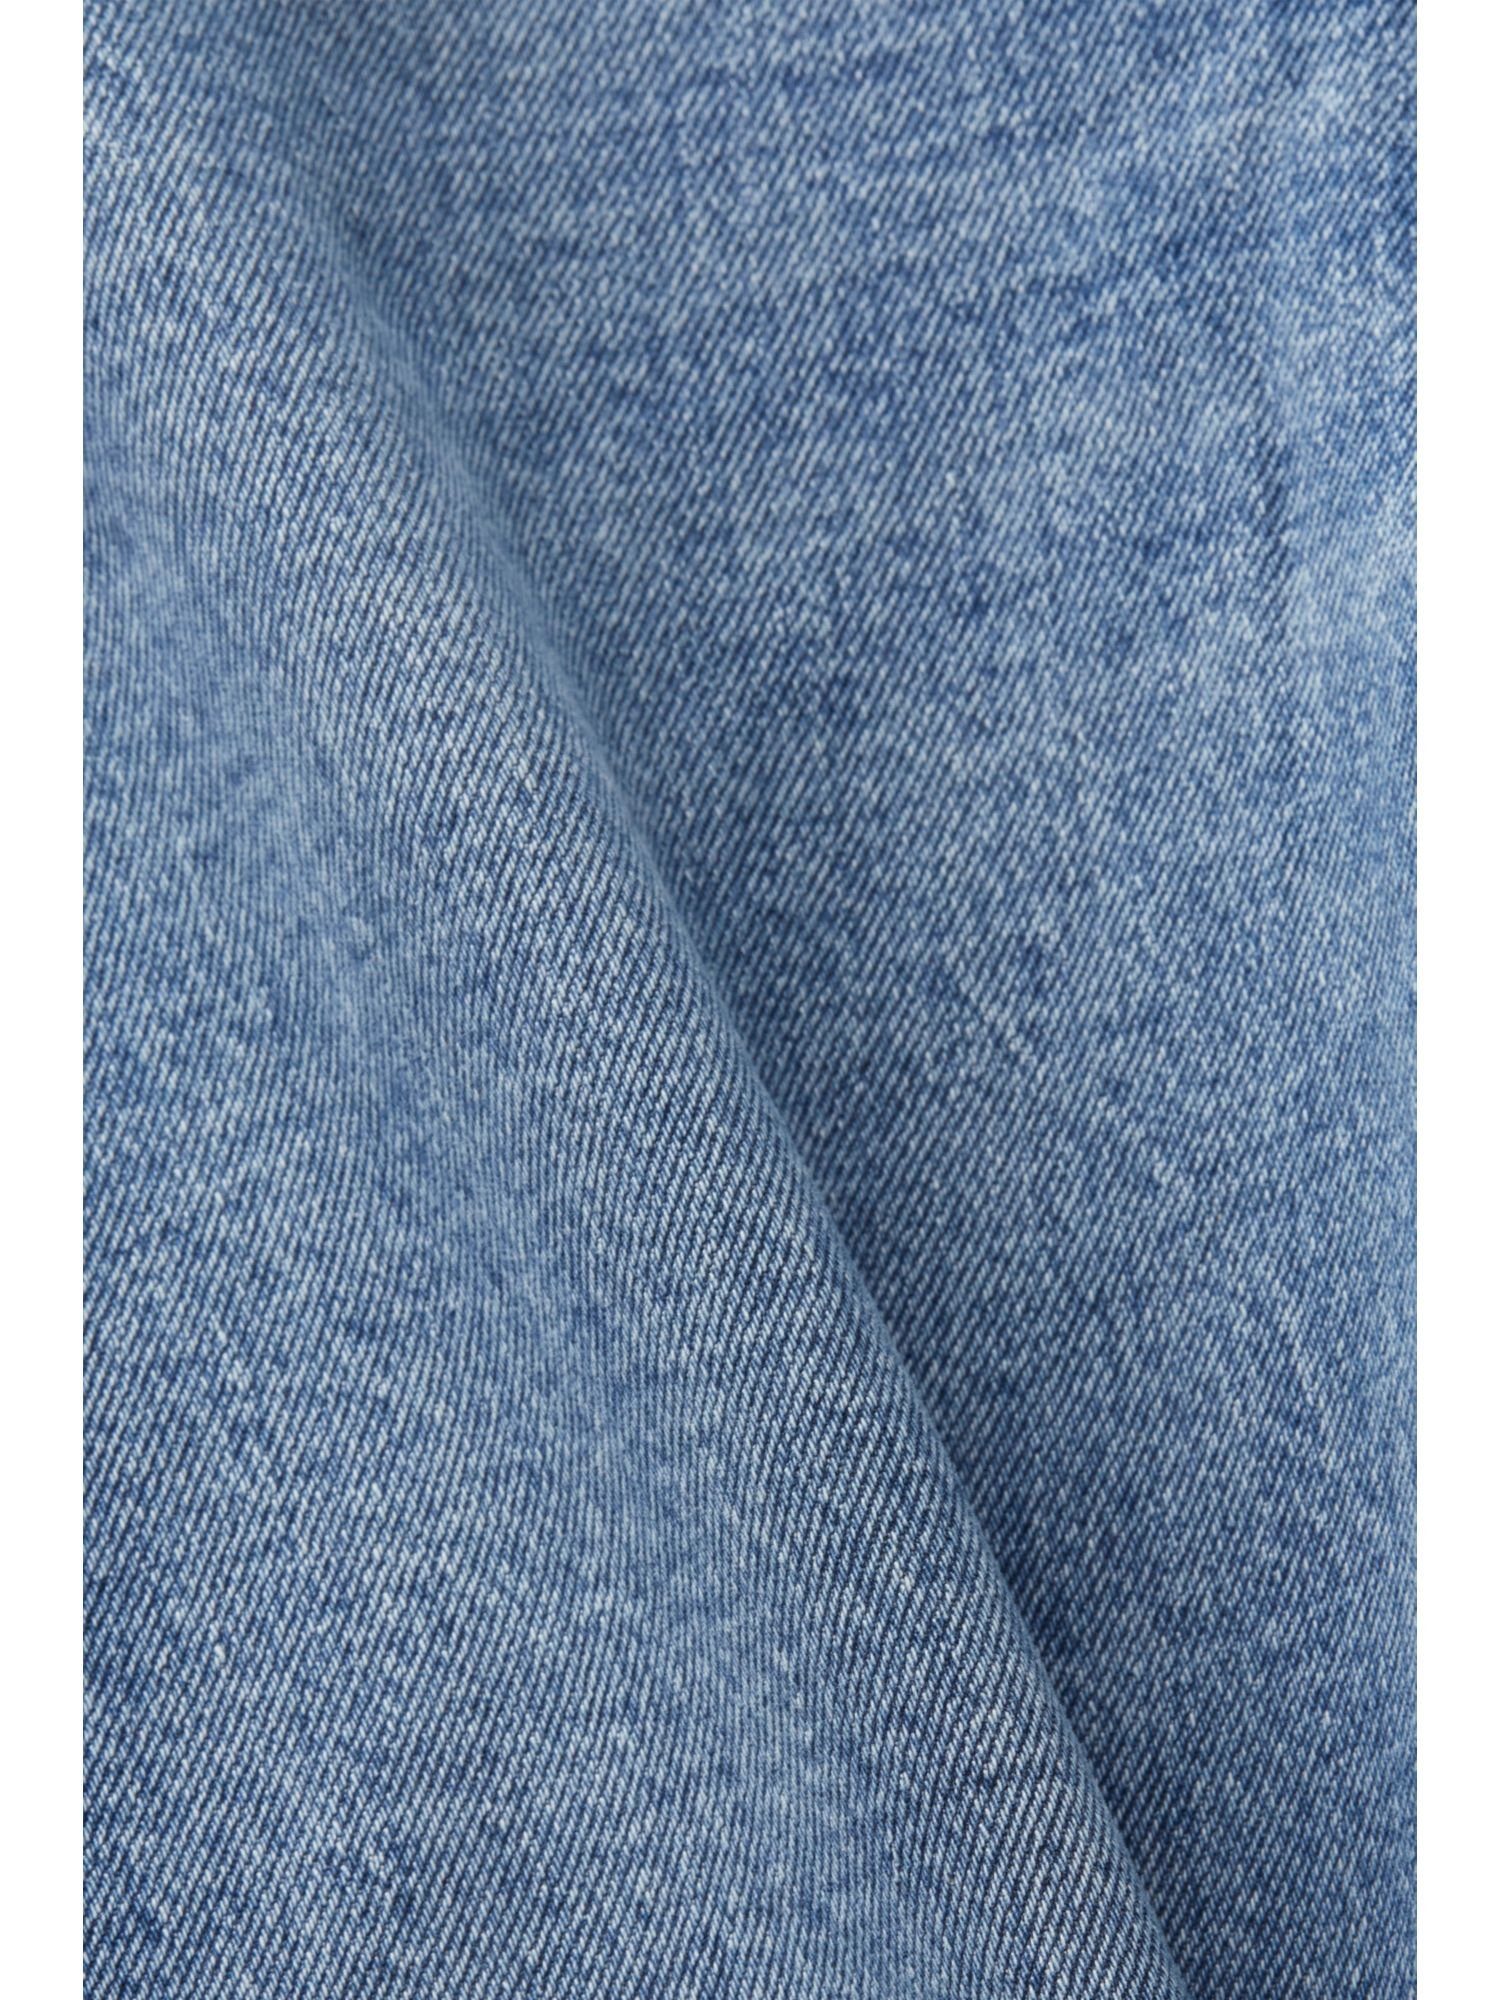 Relax-fit-Jeans Bundhöhe Retro-Classic-Jeans mit mittlerer Esprit